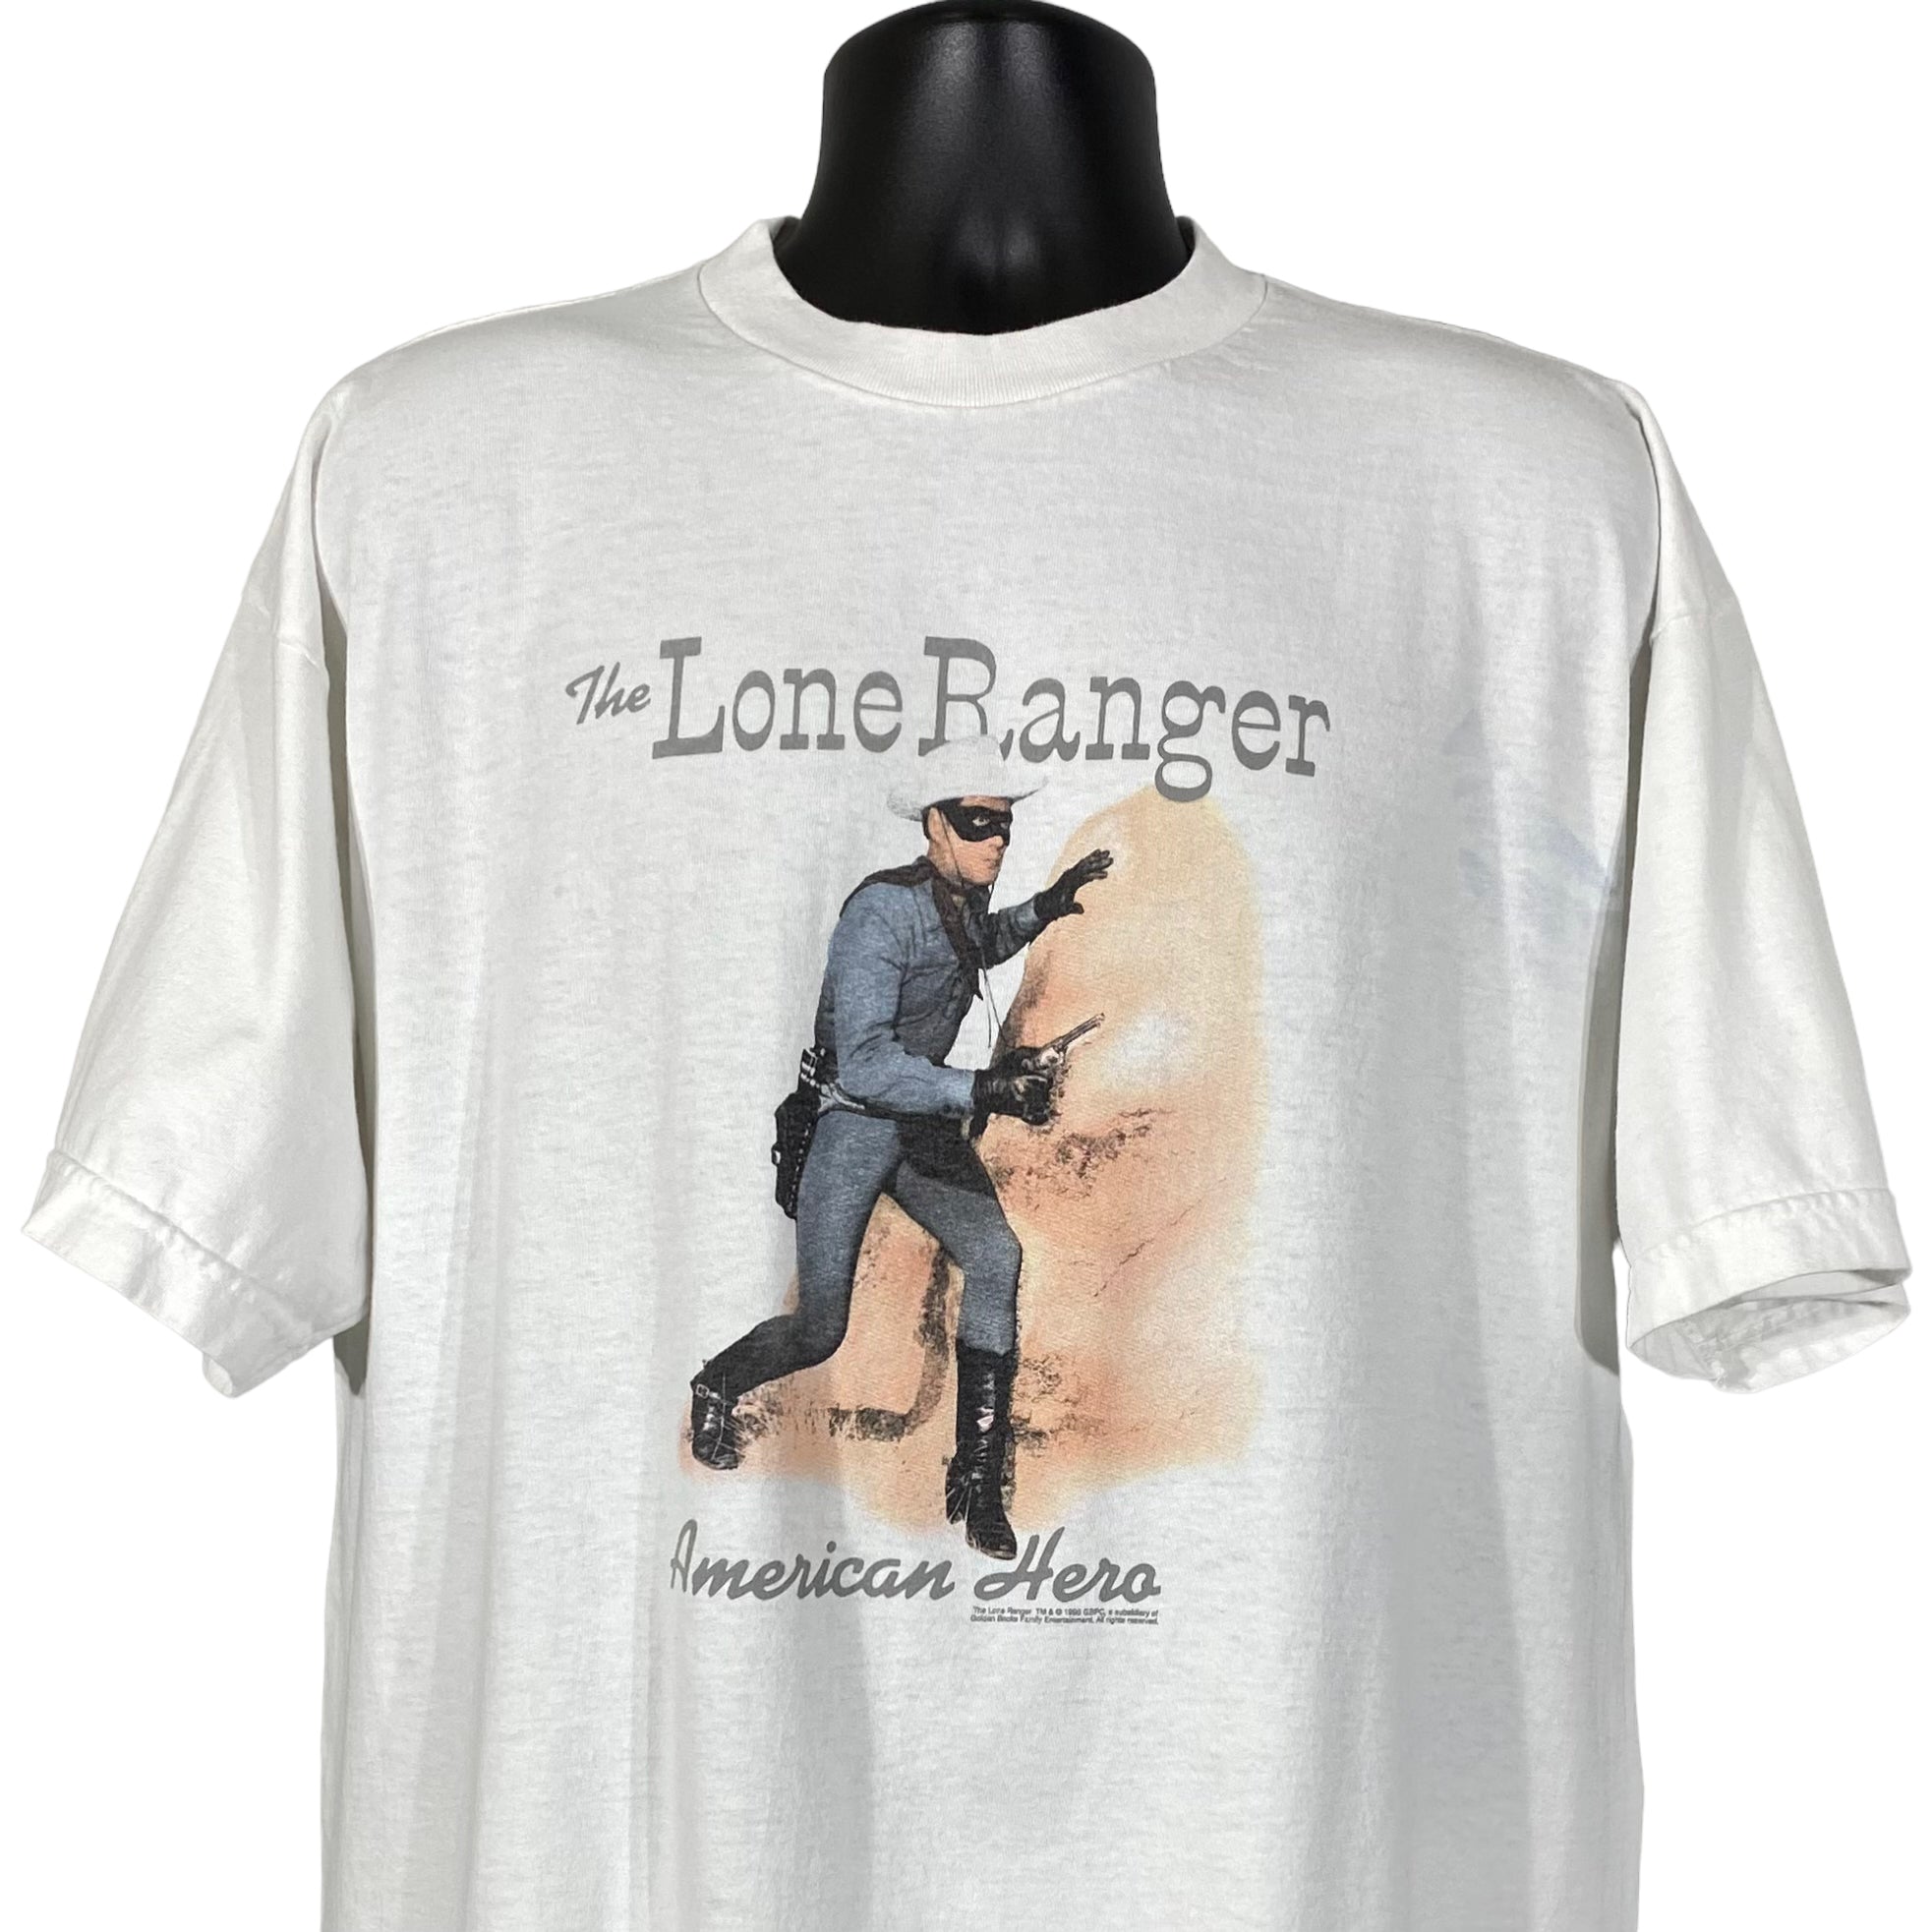 Vintage The Lone Ranger TV Show Promo Tee 1996